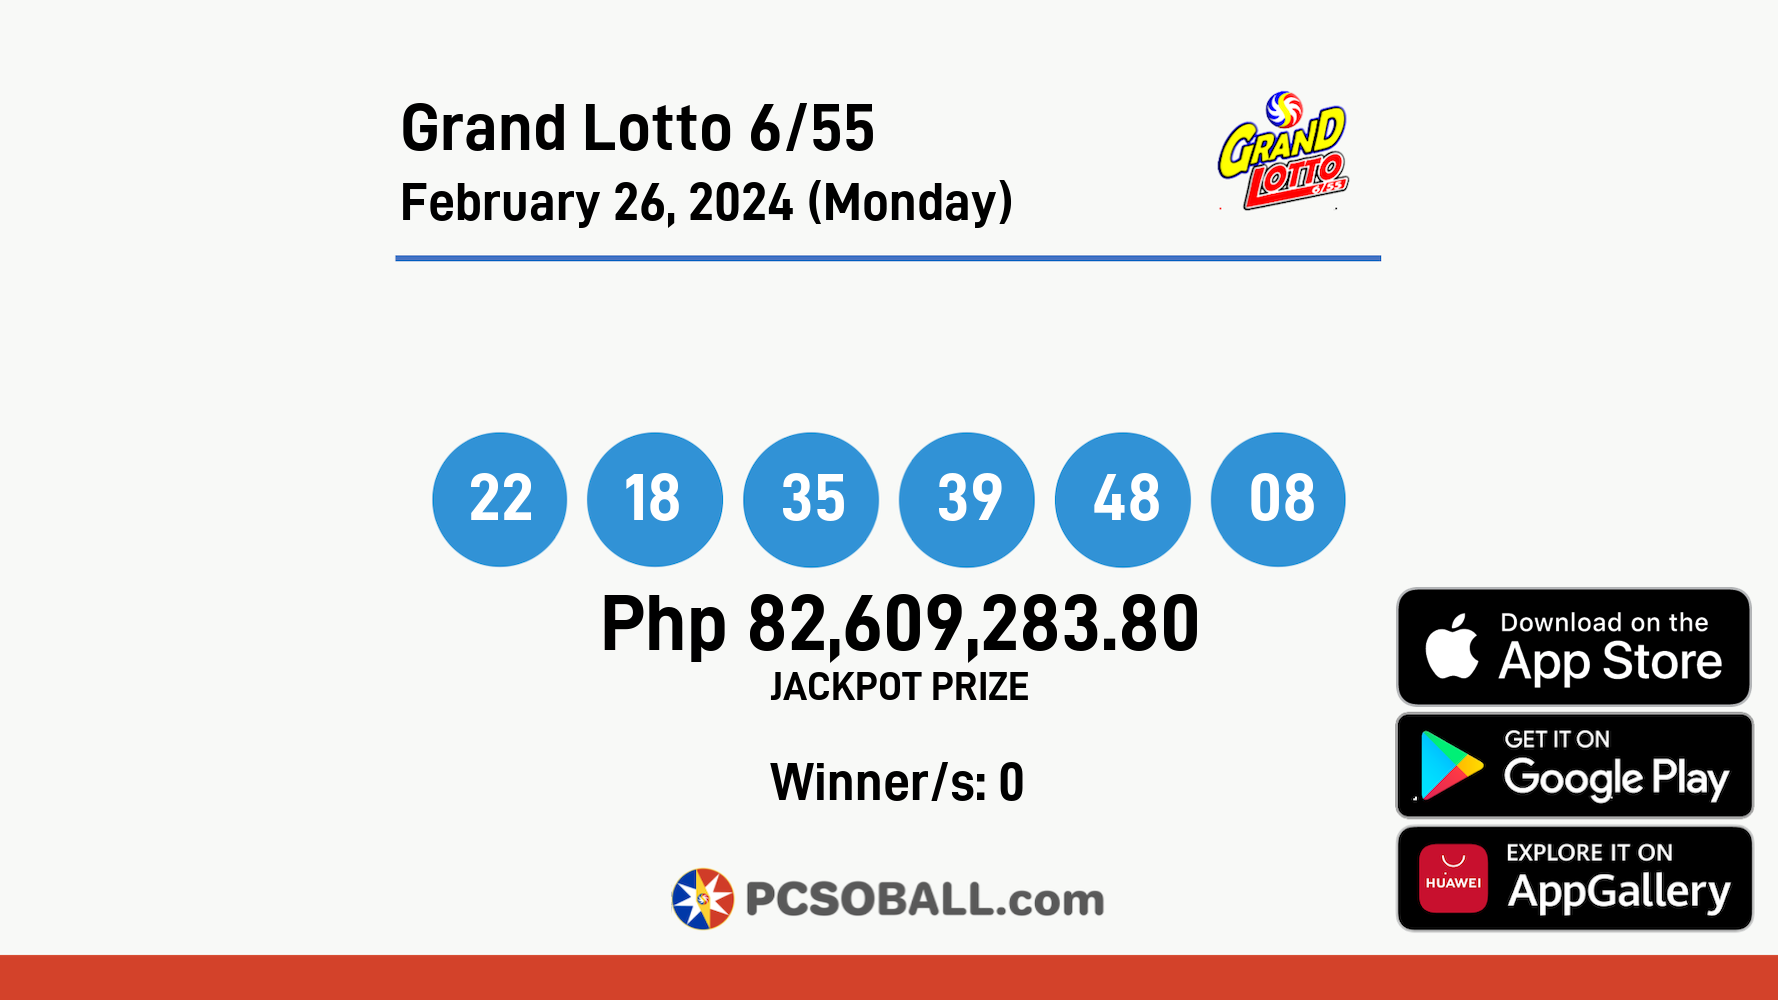 Grand Lotto 6/55 February 26, 2024 (Monday) Result